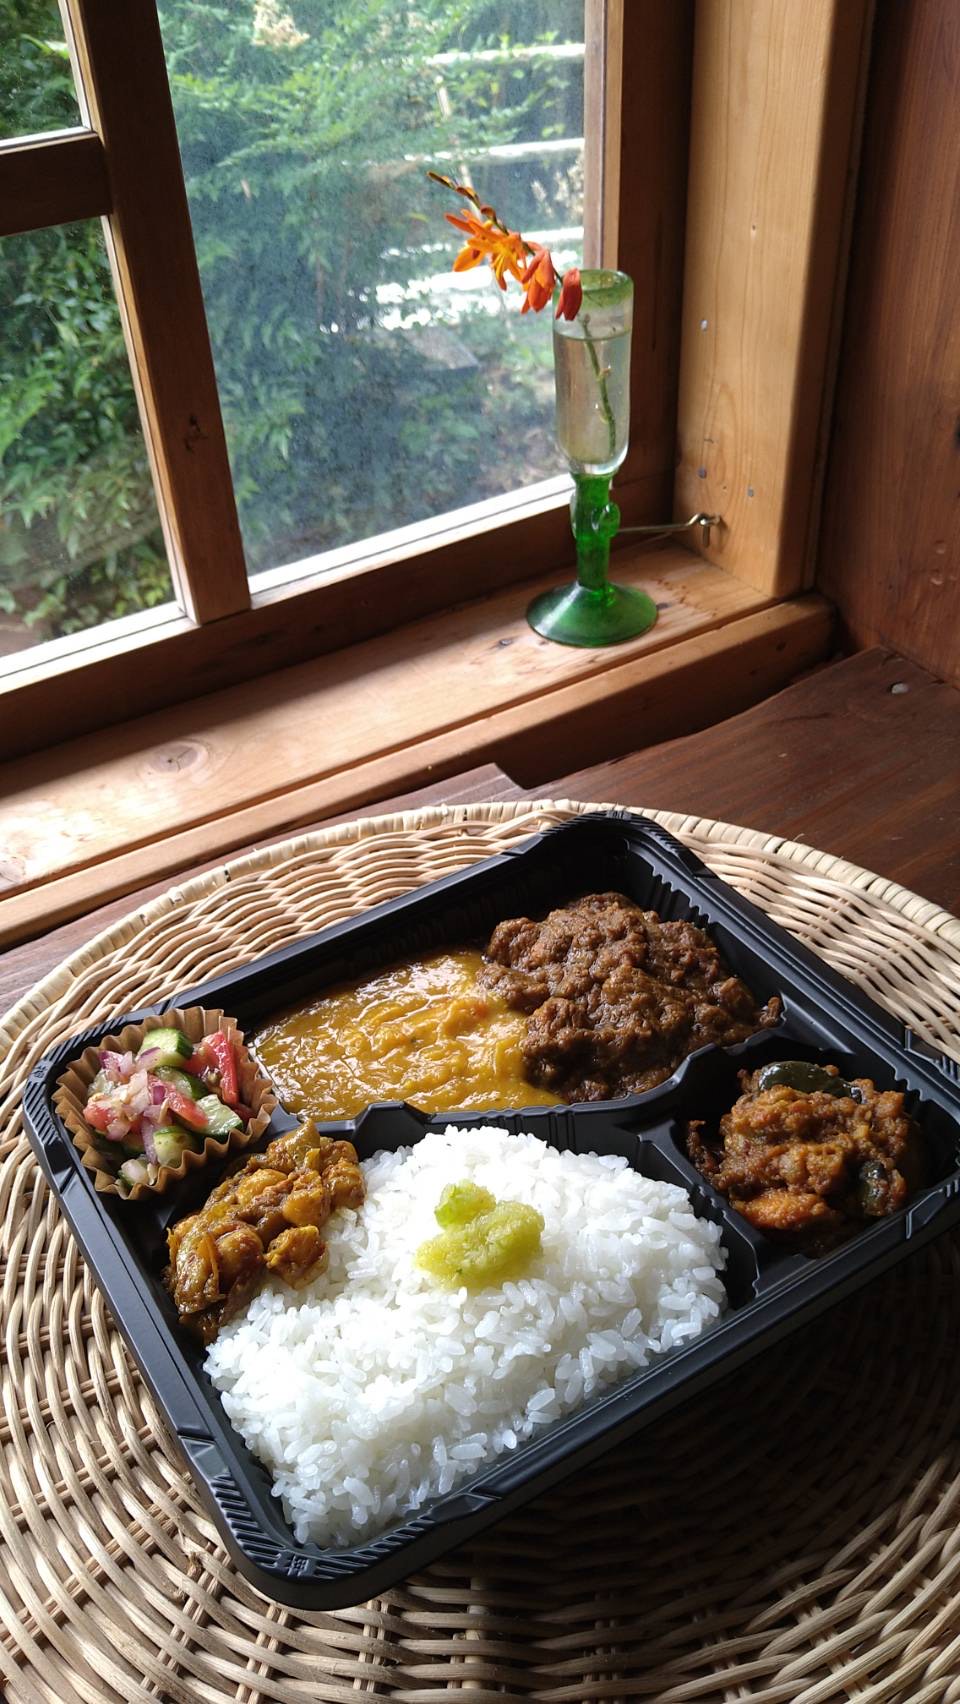 Shanti curry